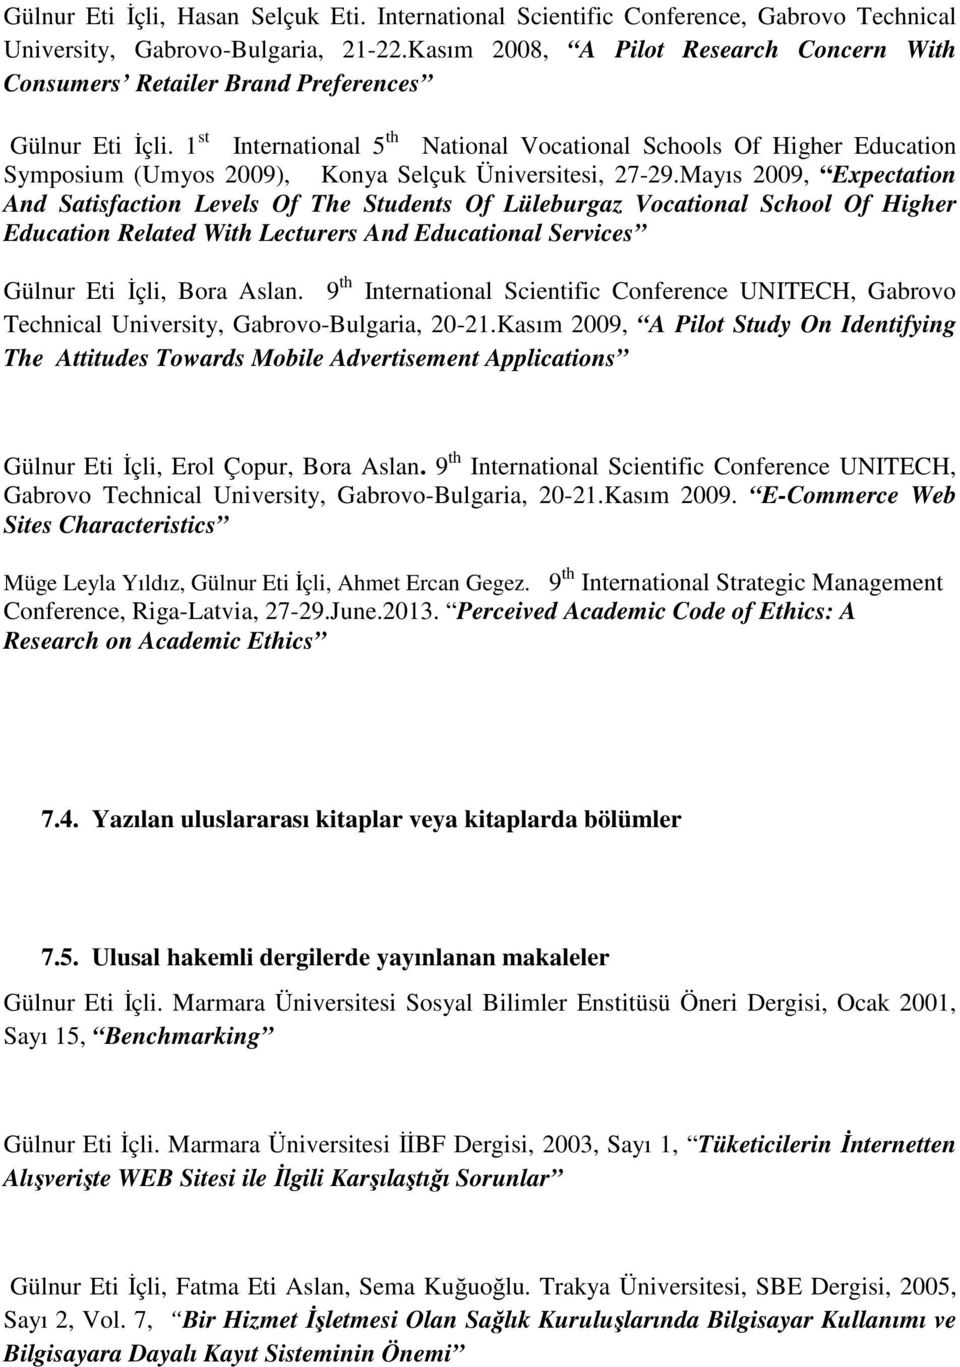 1 st International 5 th National Vocational Schools Of Higher Education Symposium (Umyos 2009), Konya Selçuk Üniversitesi, 27-29.